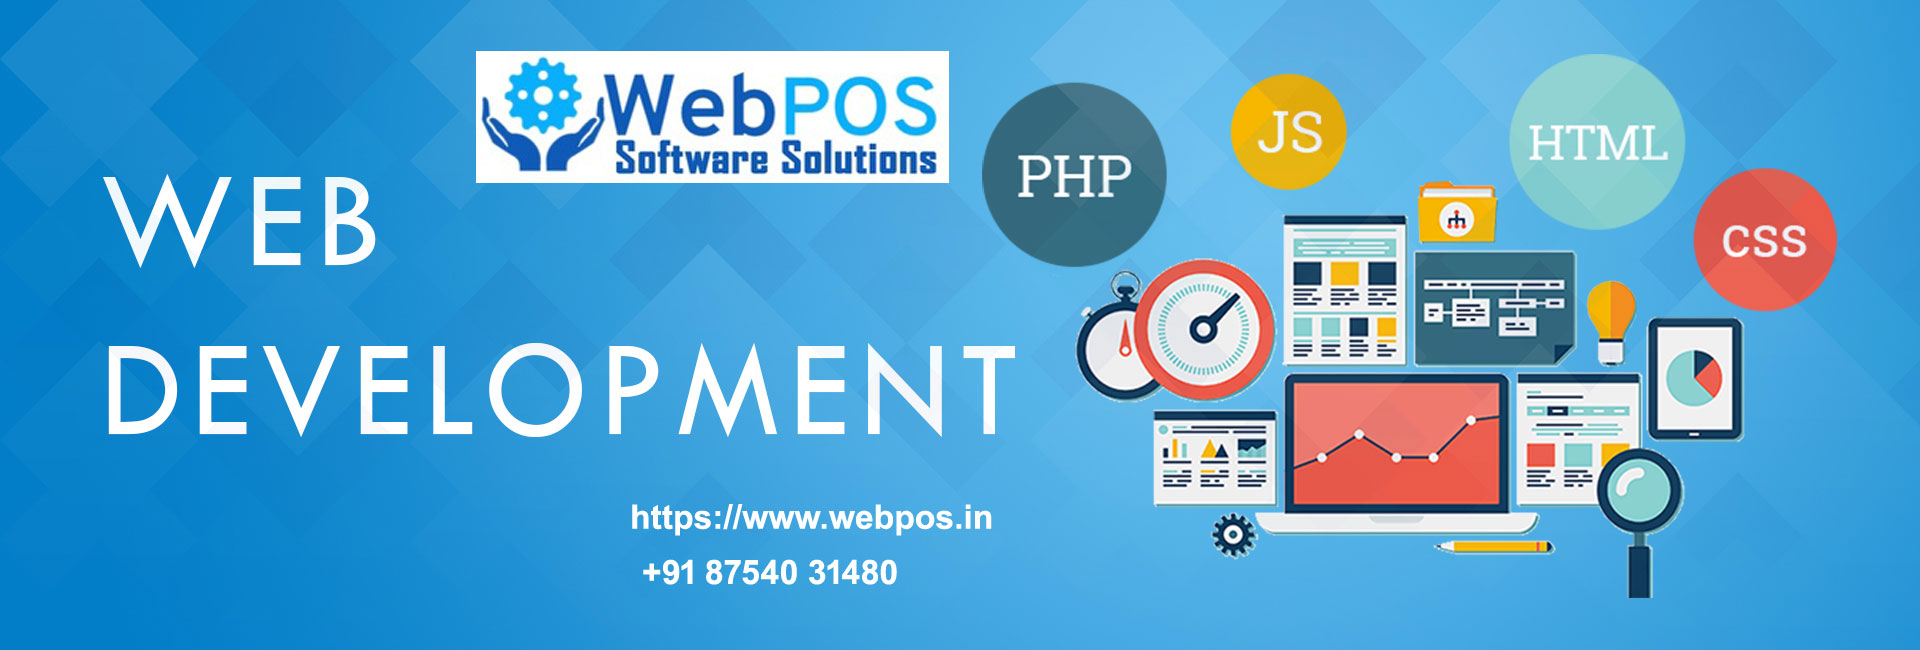 website-development-webpos.jpg